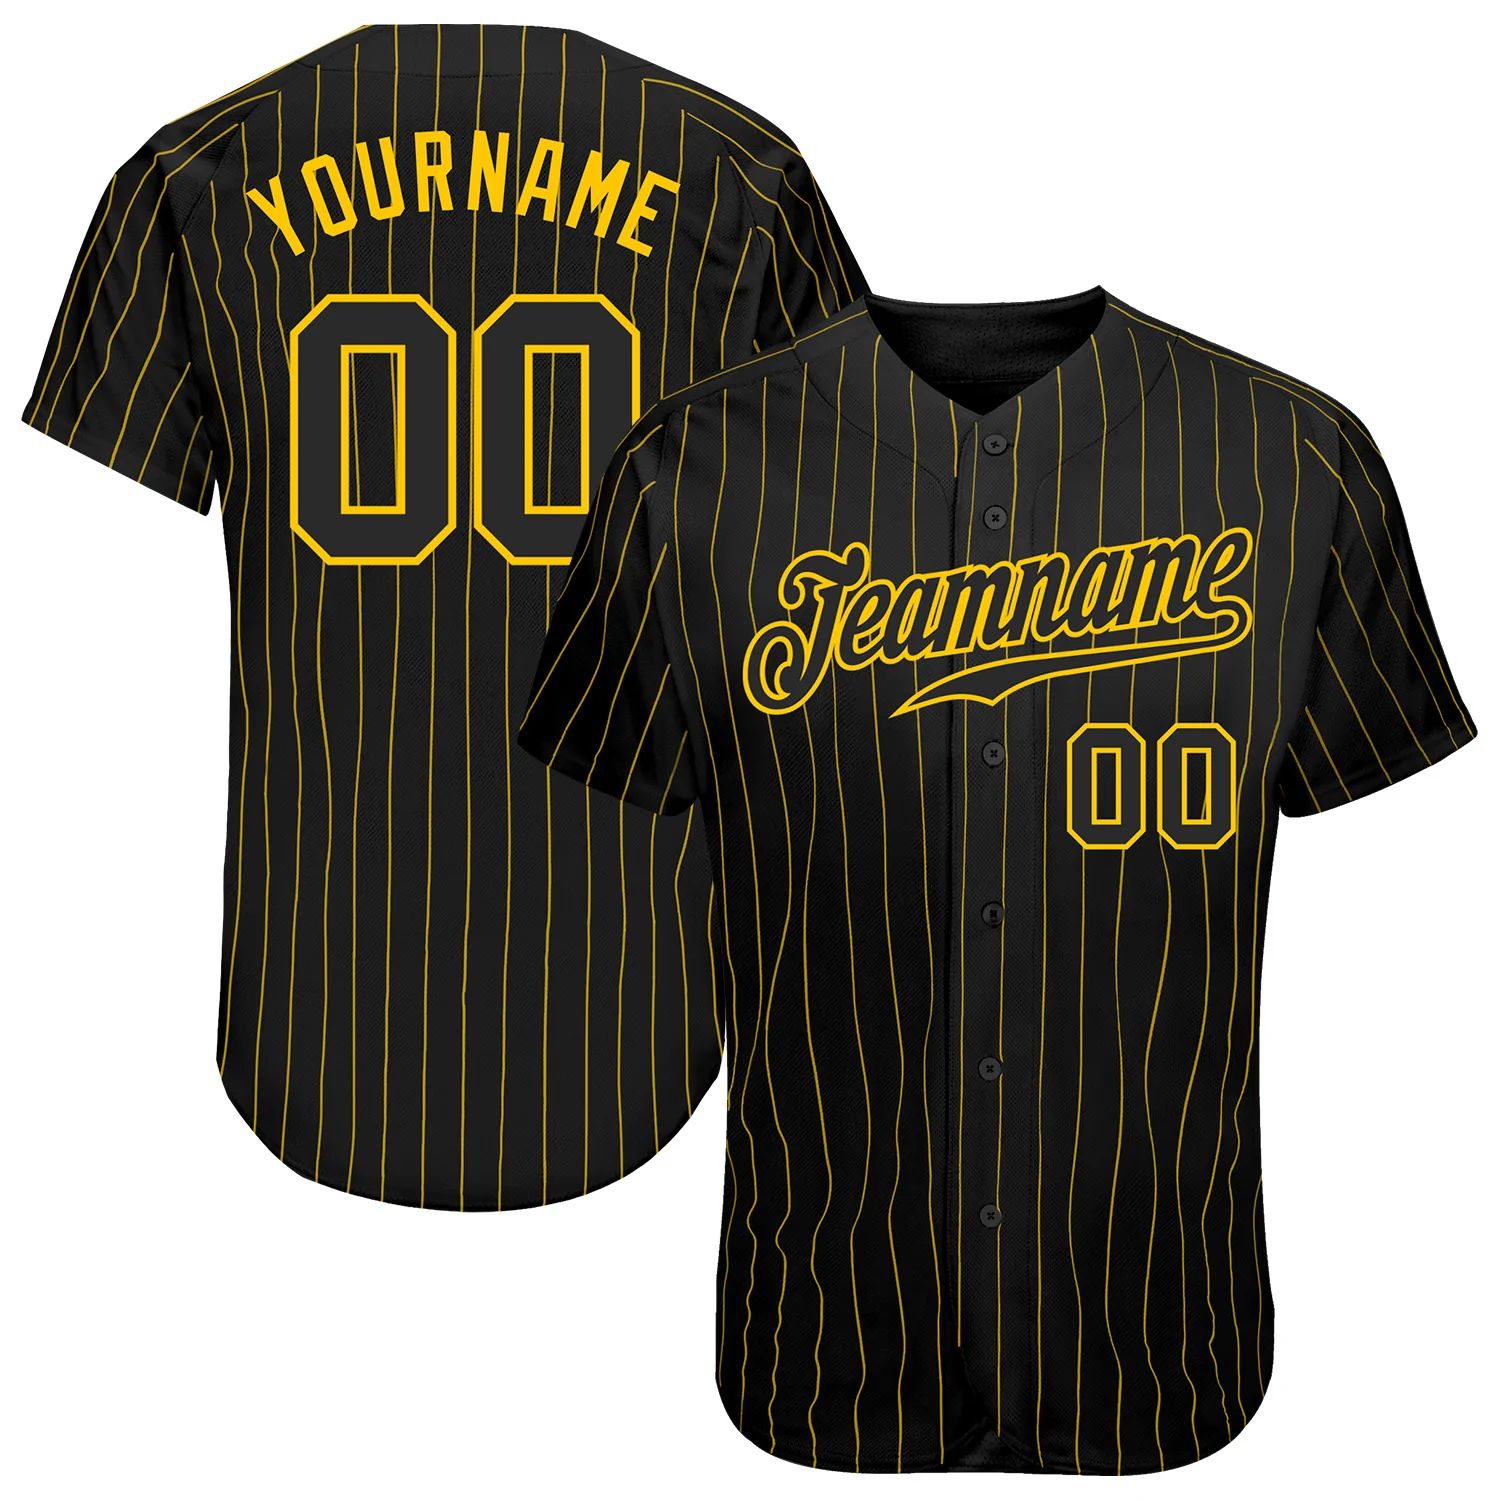 build-gold-black-pinstripe-baseball-black-jersey-authentic-black0443-online-1.jpg